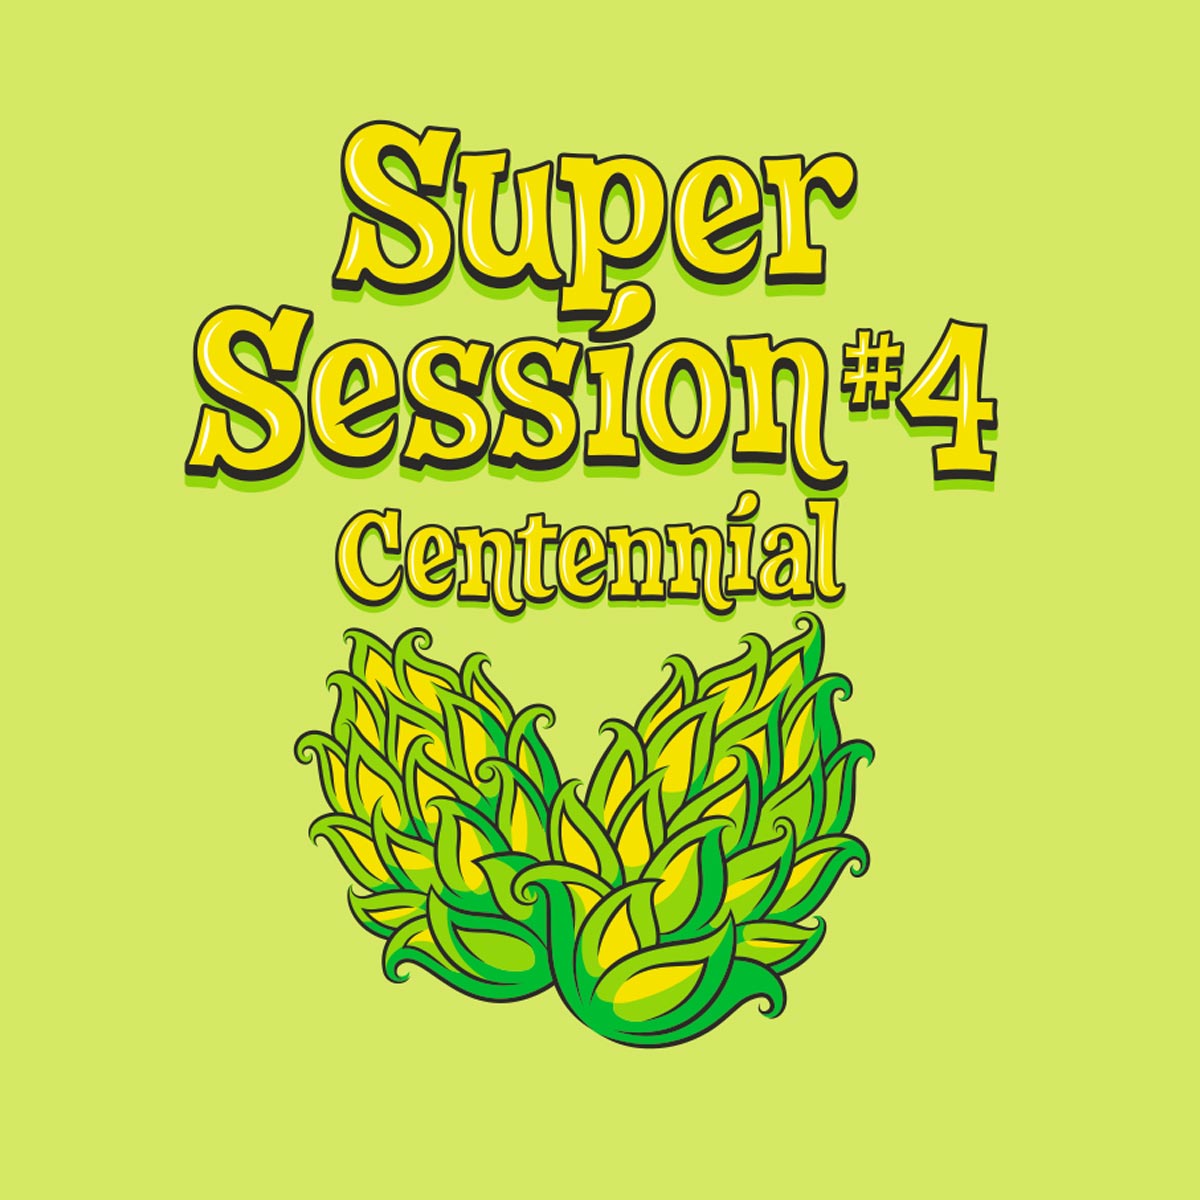 Super Session #4 - Centennial